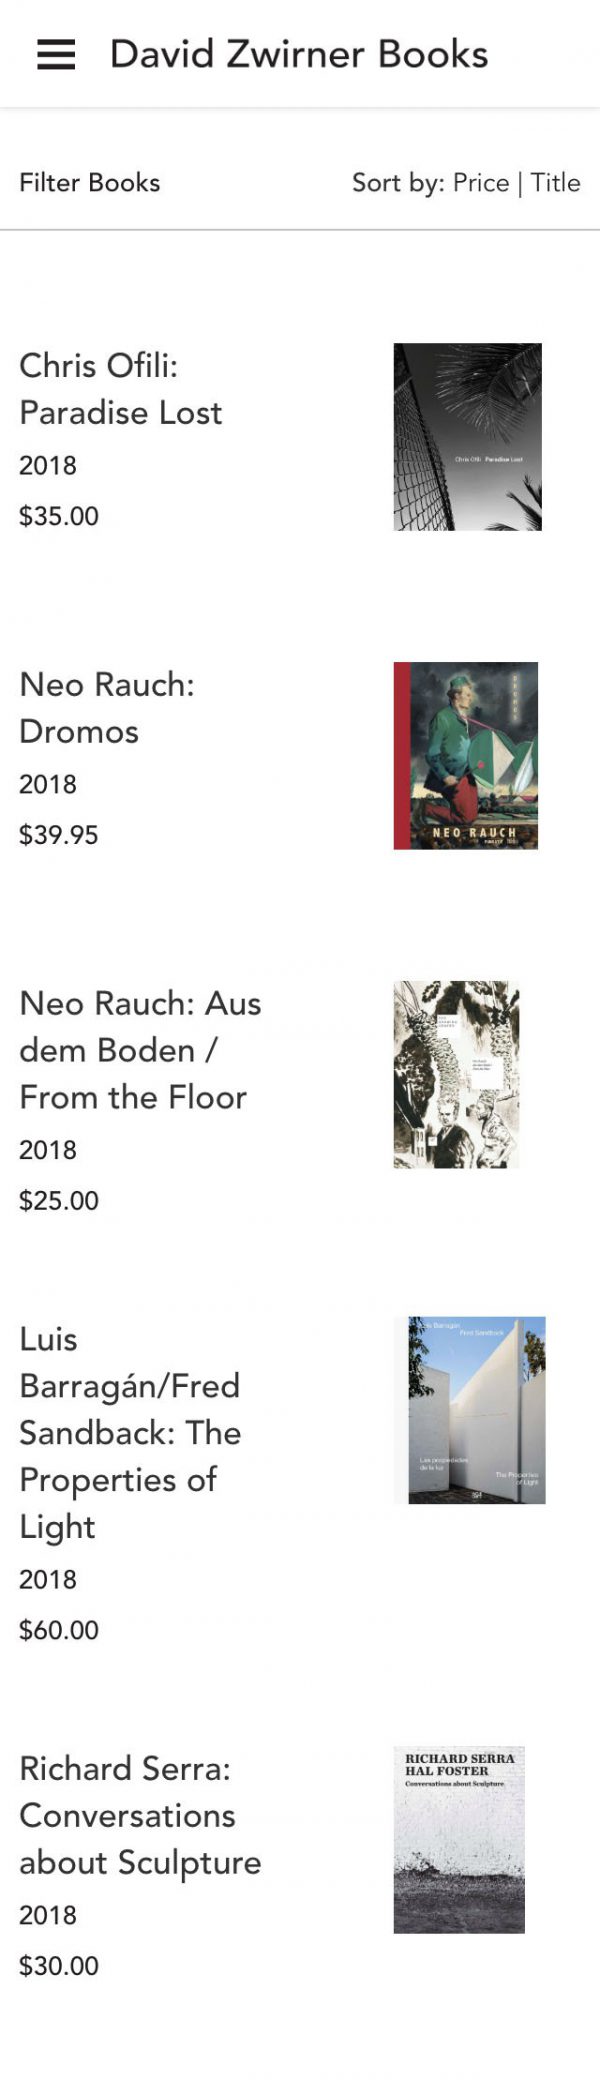 Screenshot of the David Zwirner Books website's books landing page